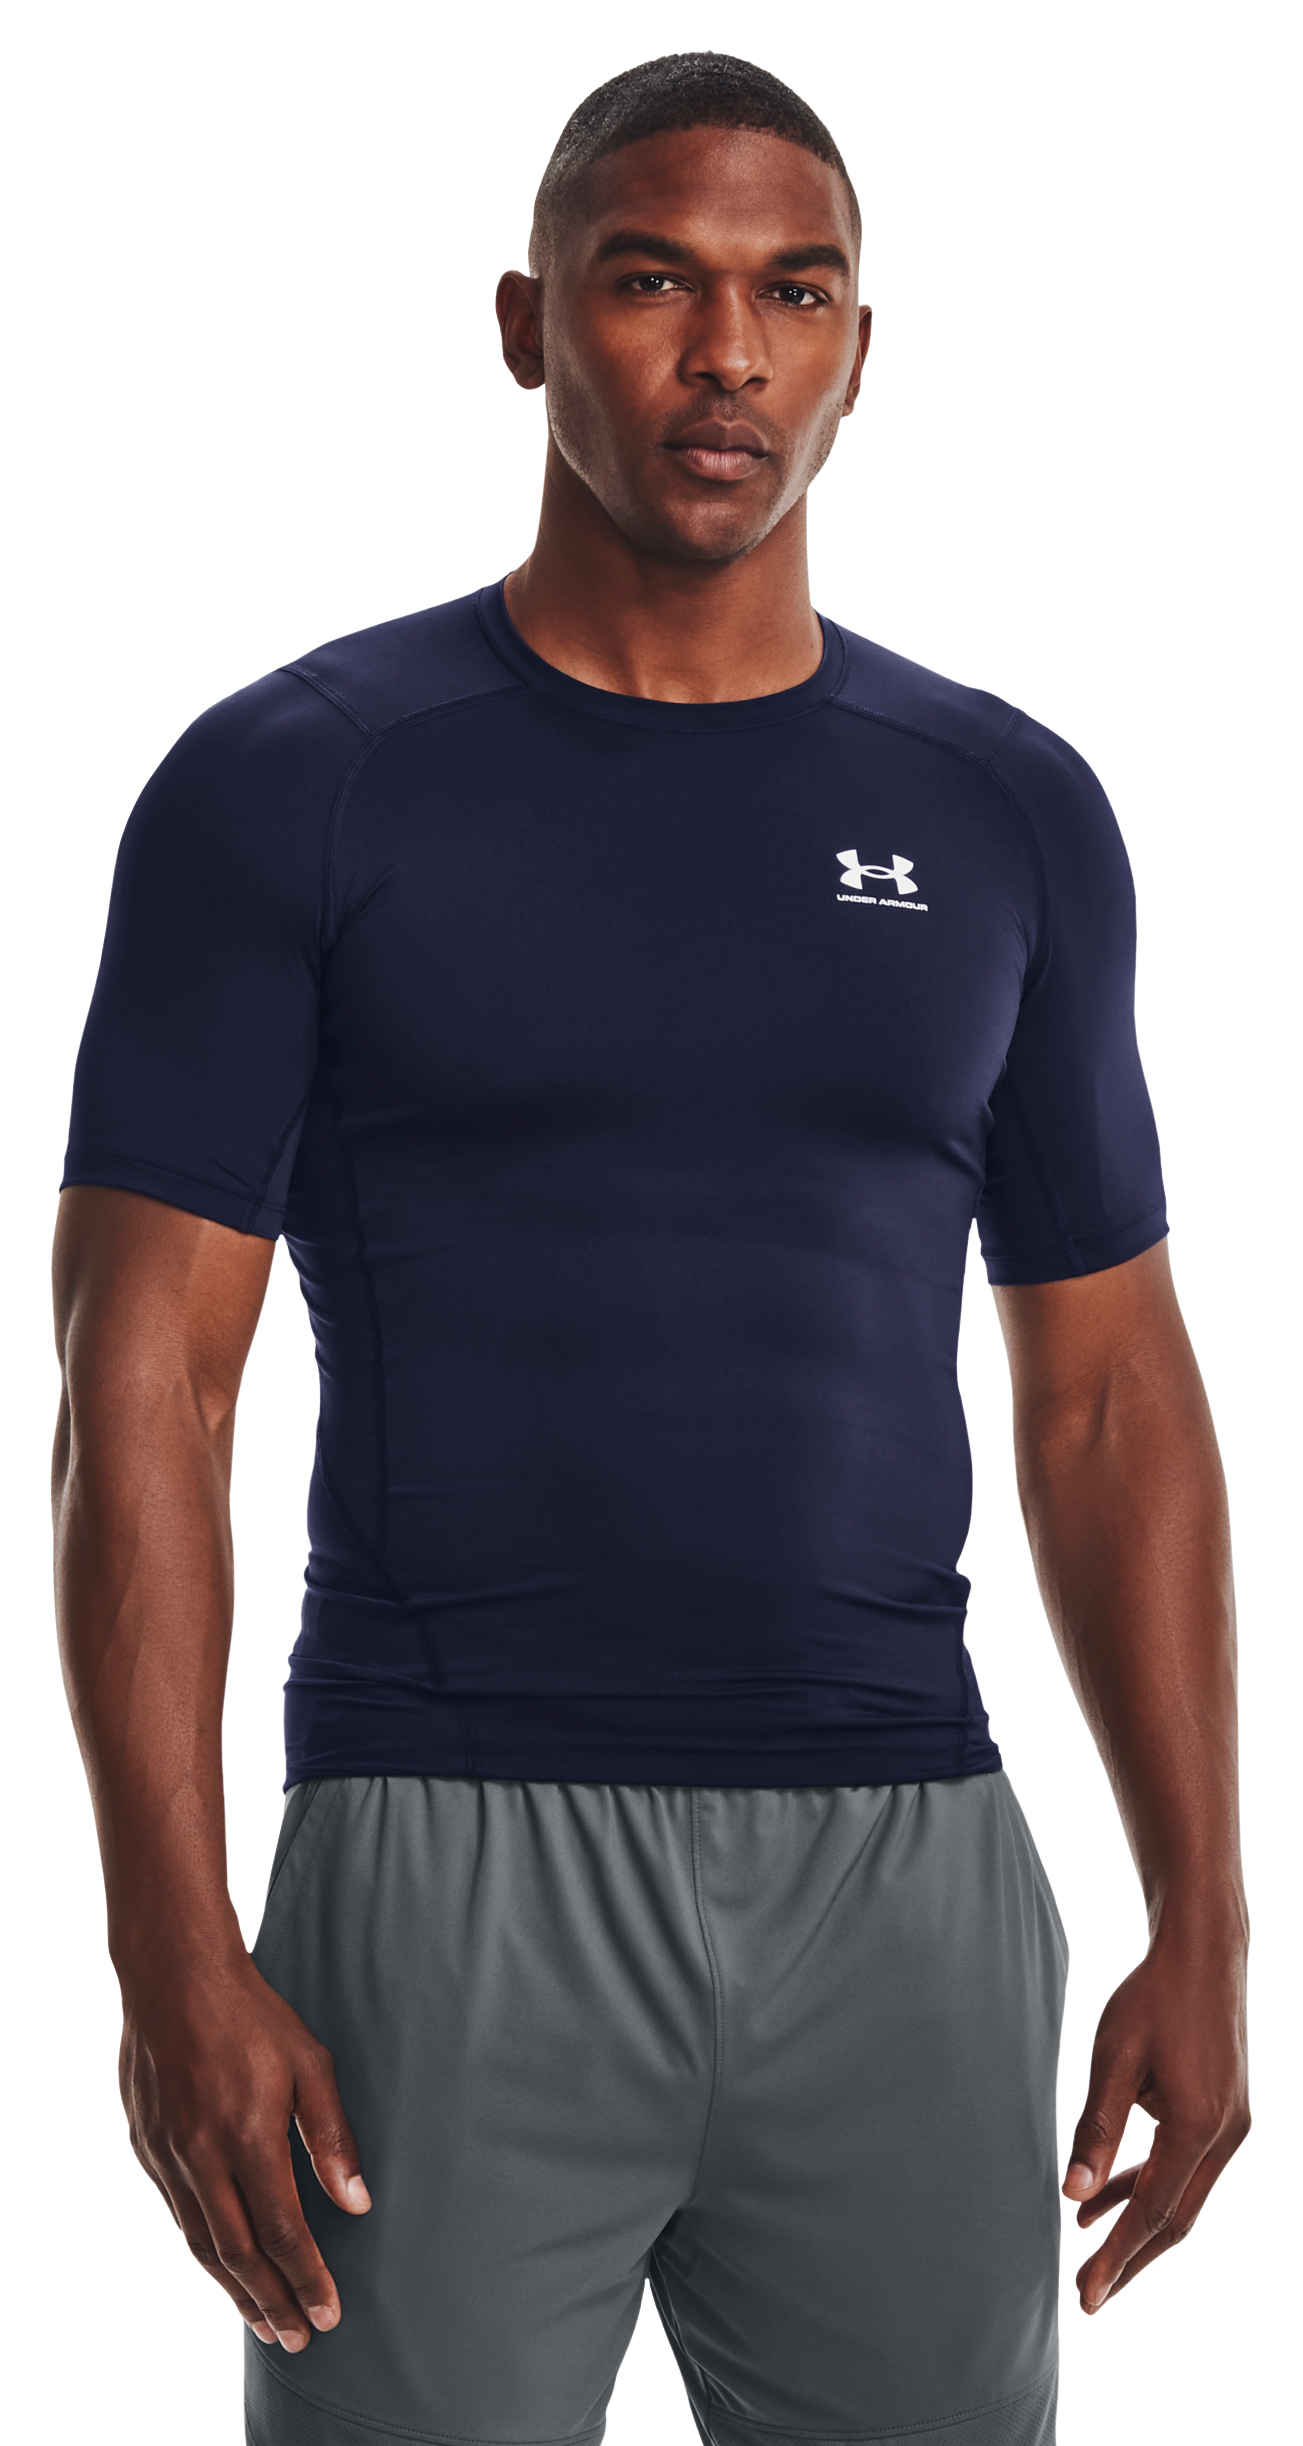 Under Armour HeatGear Short-Sleeve T-Shirt for Men - Midnight Navy/White - XLT